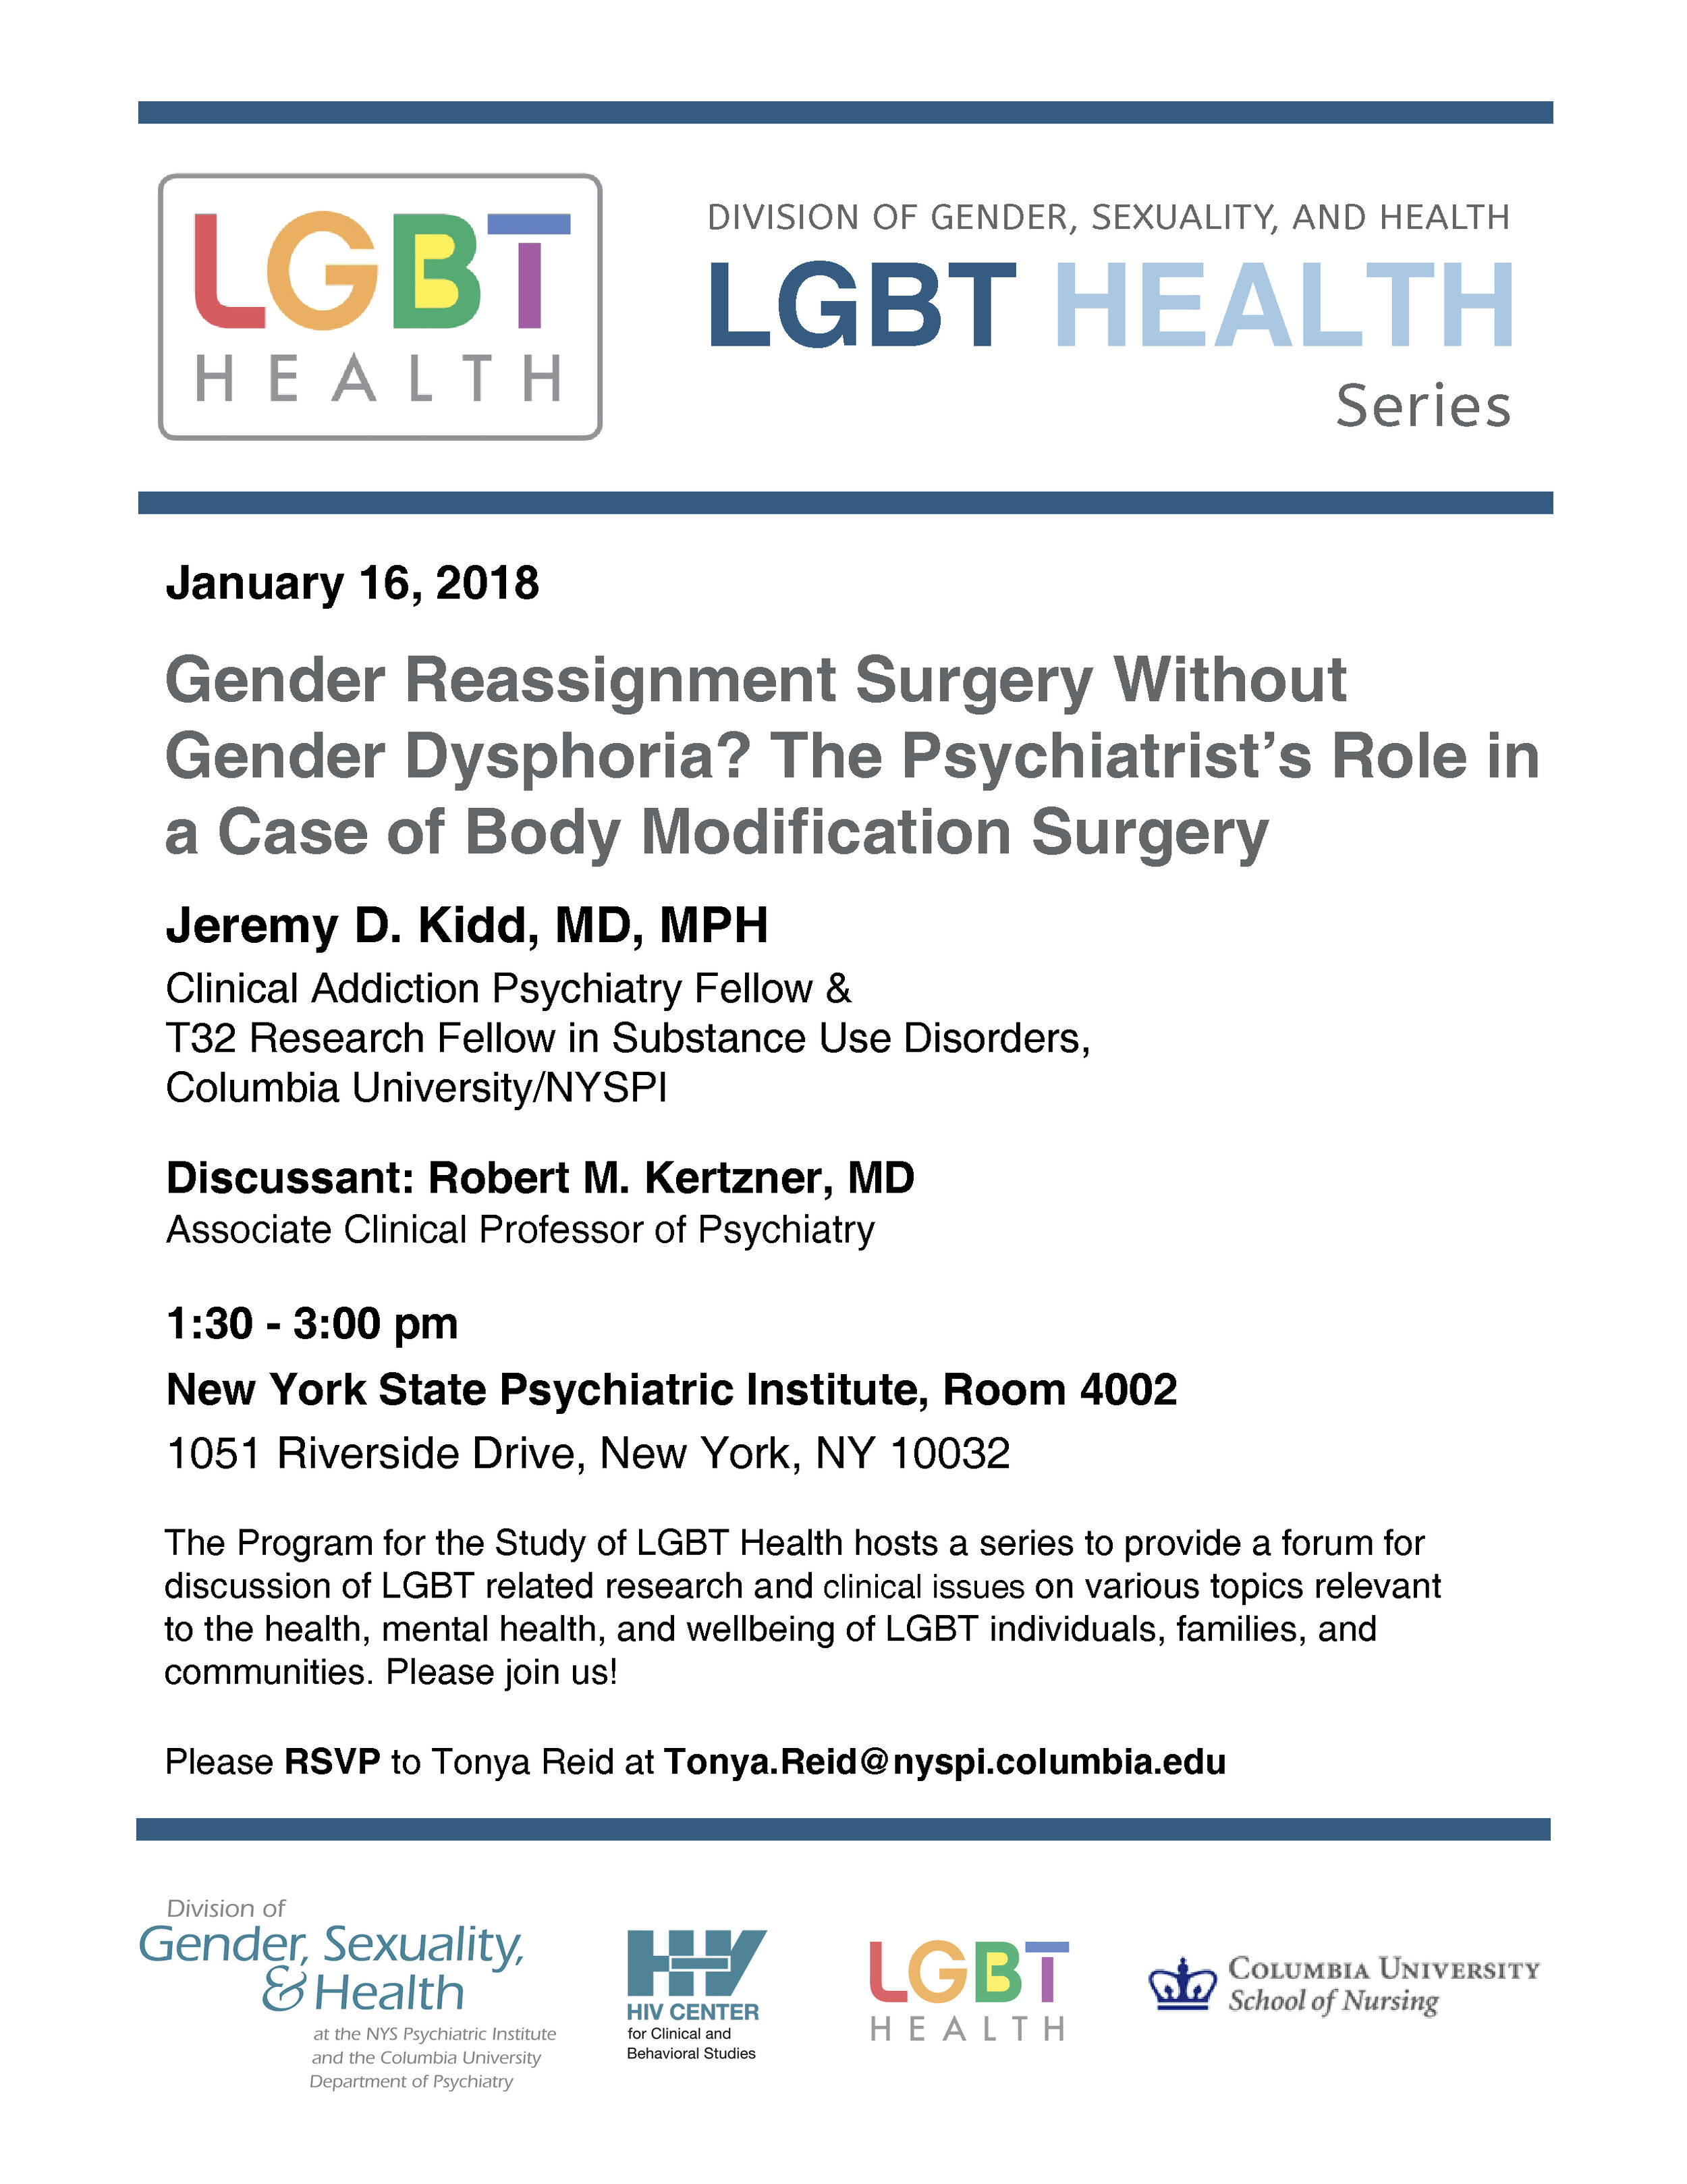 LGBT Health Series Jan 16 2018.jpg